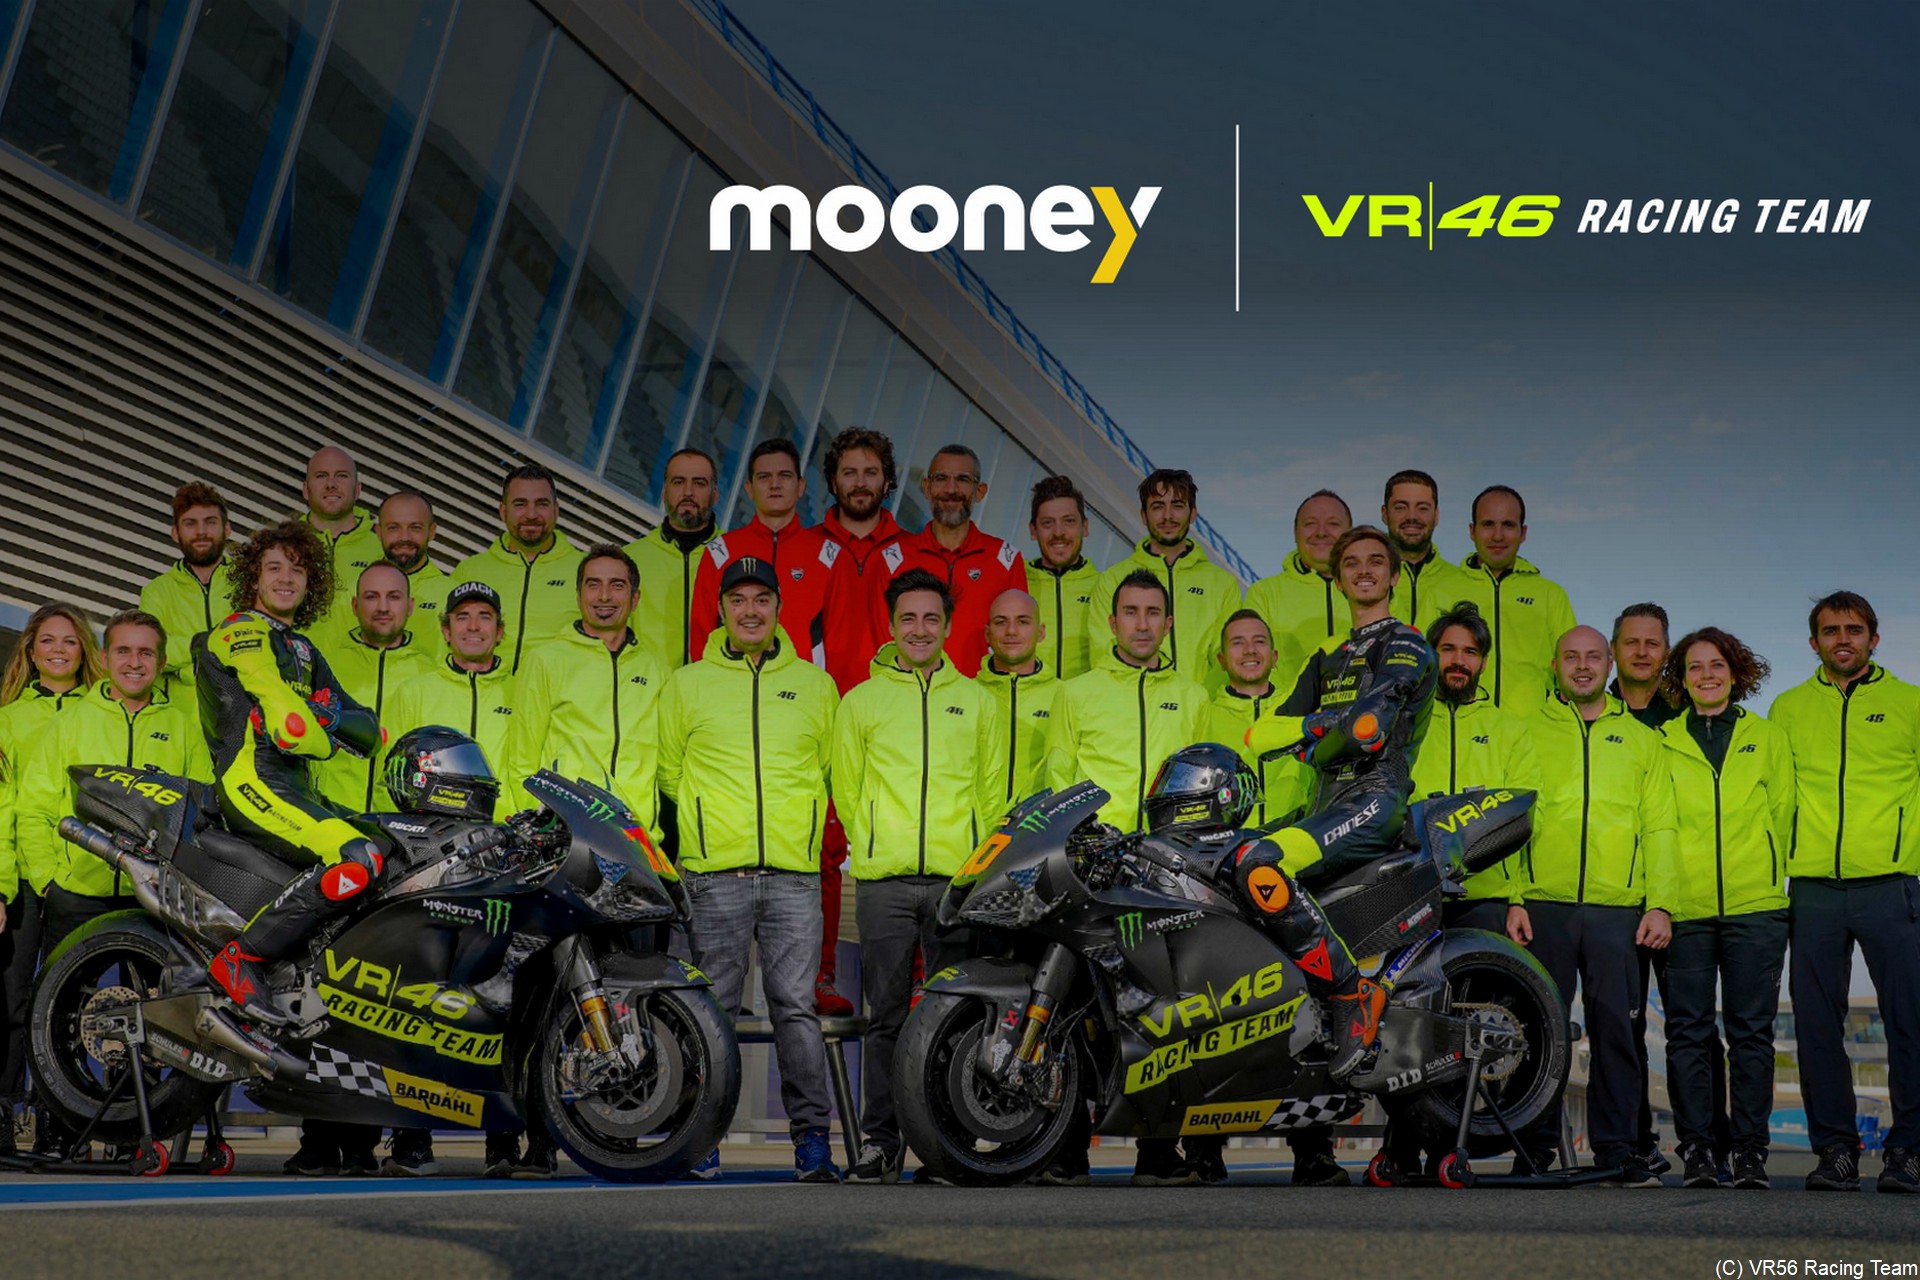 Monney x VR46 Racing Team